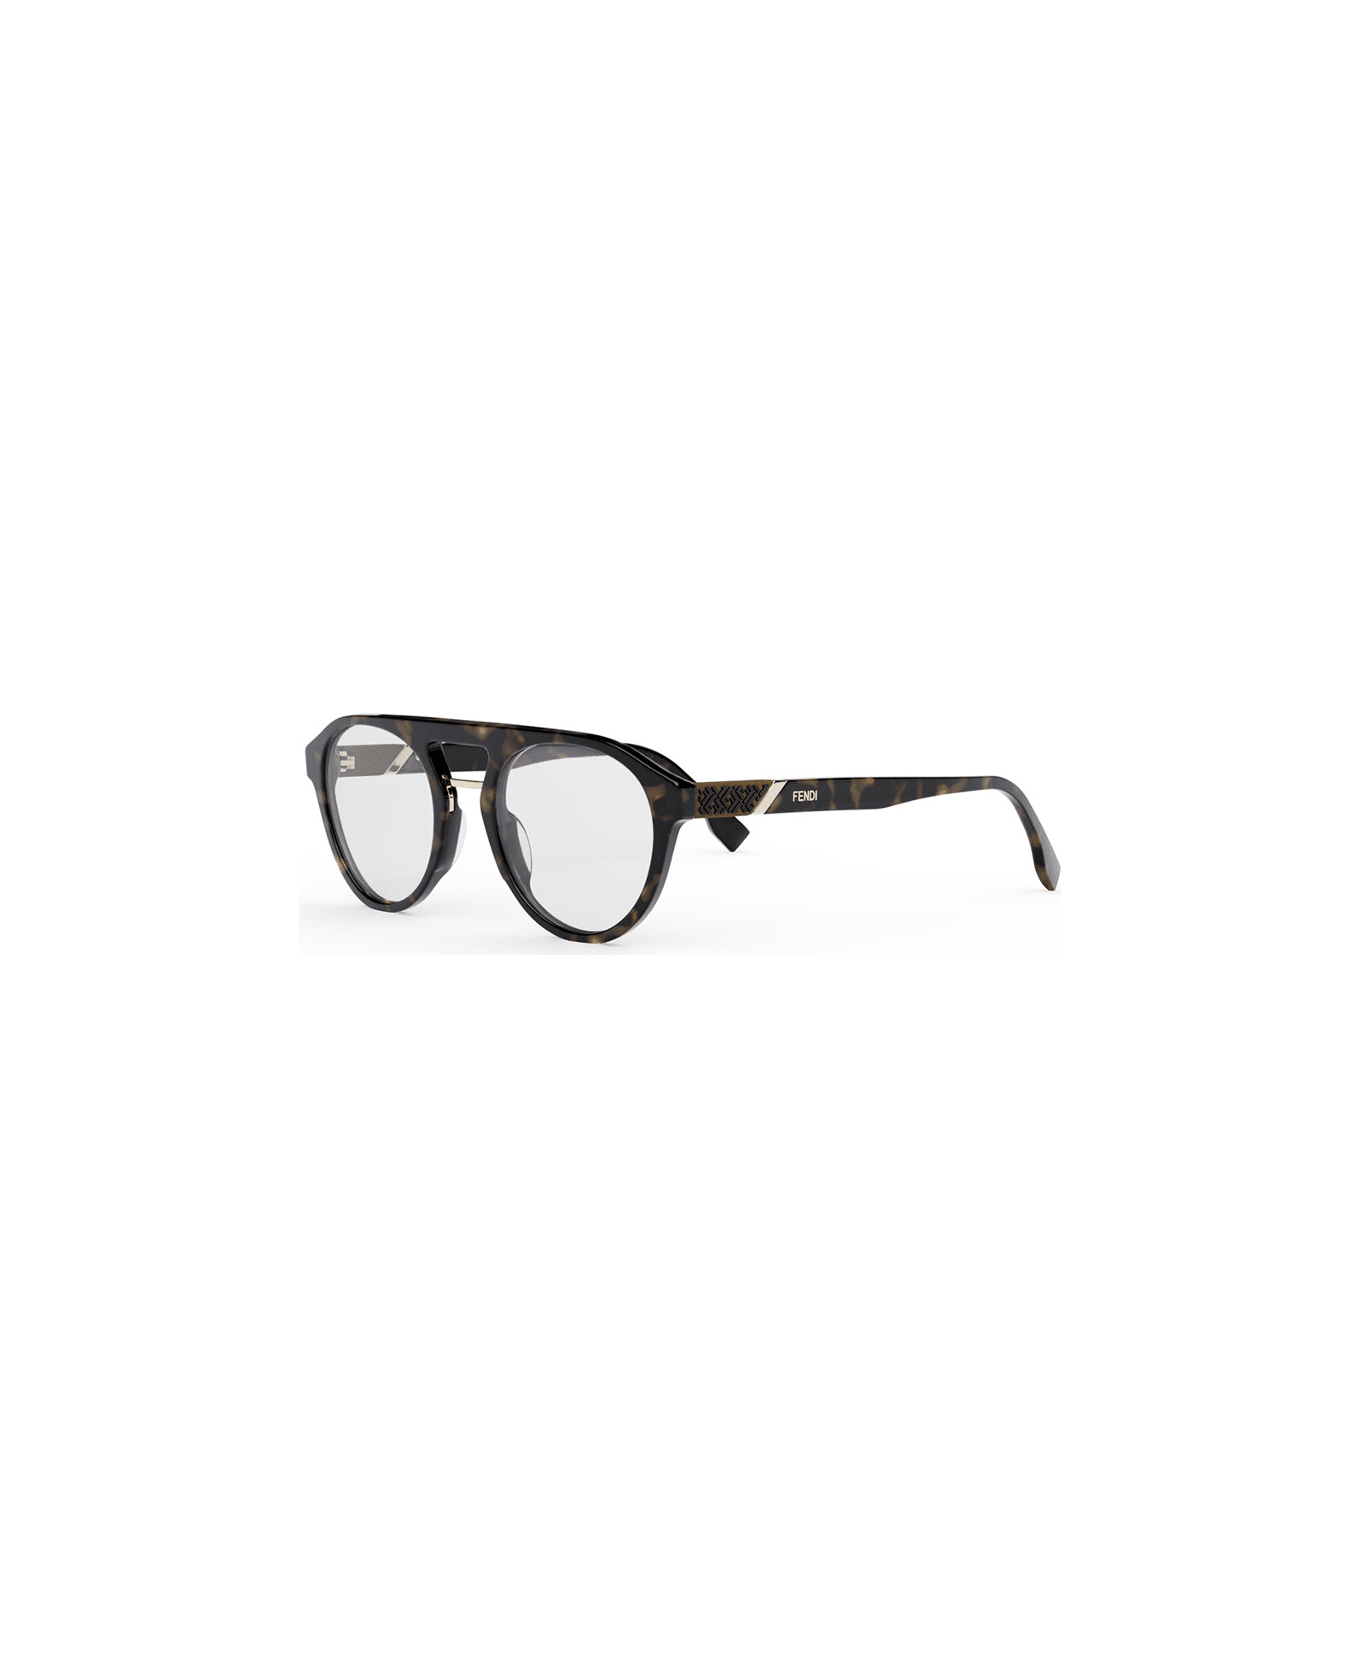 Fendi Eyewear FE50027i 052 Glasses